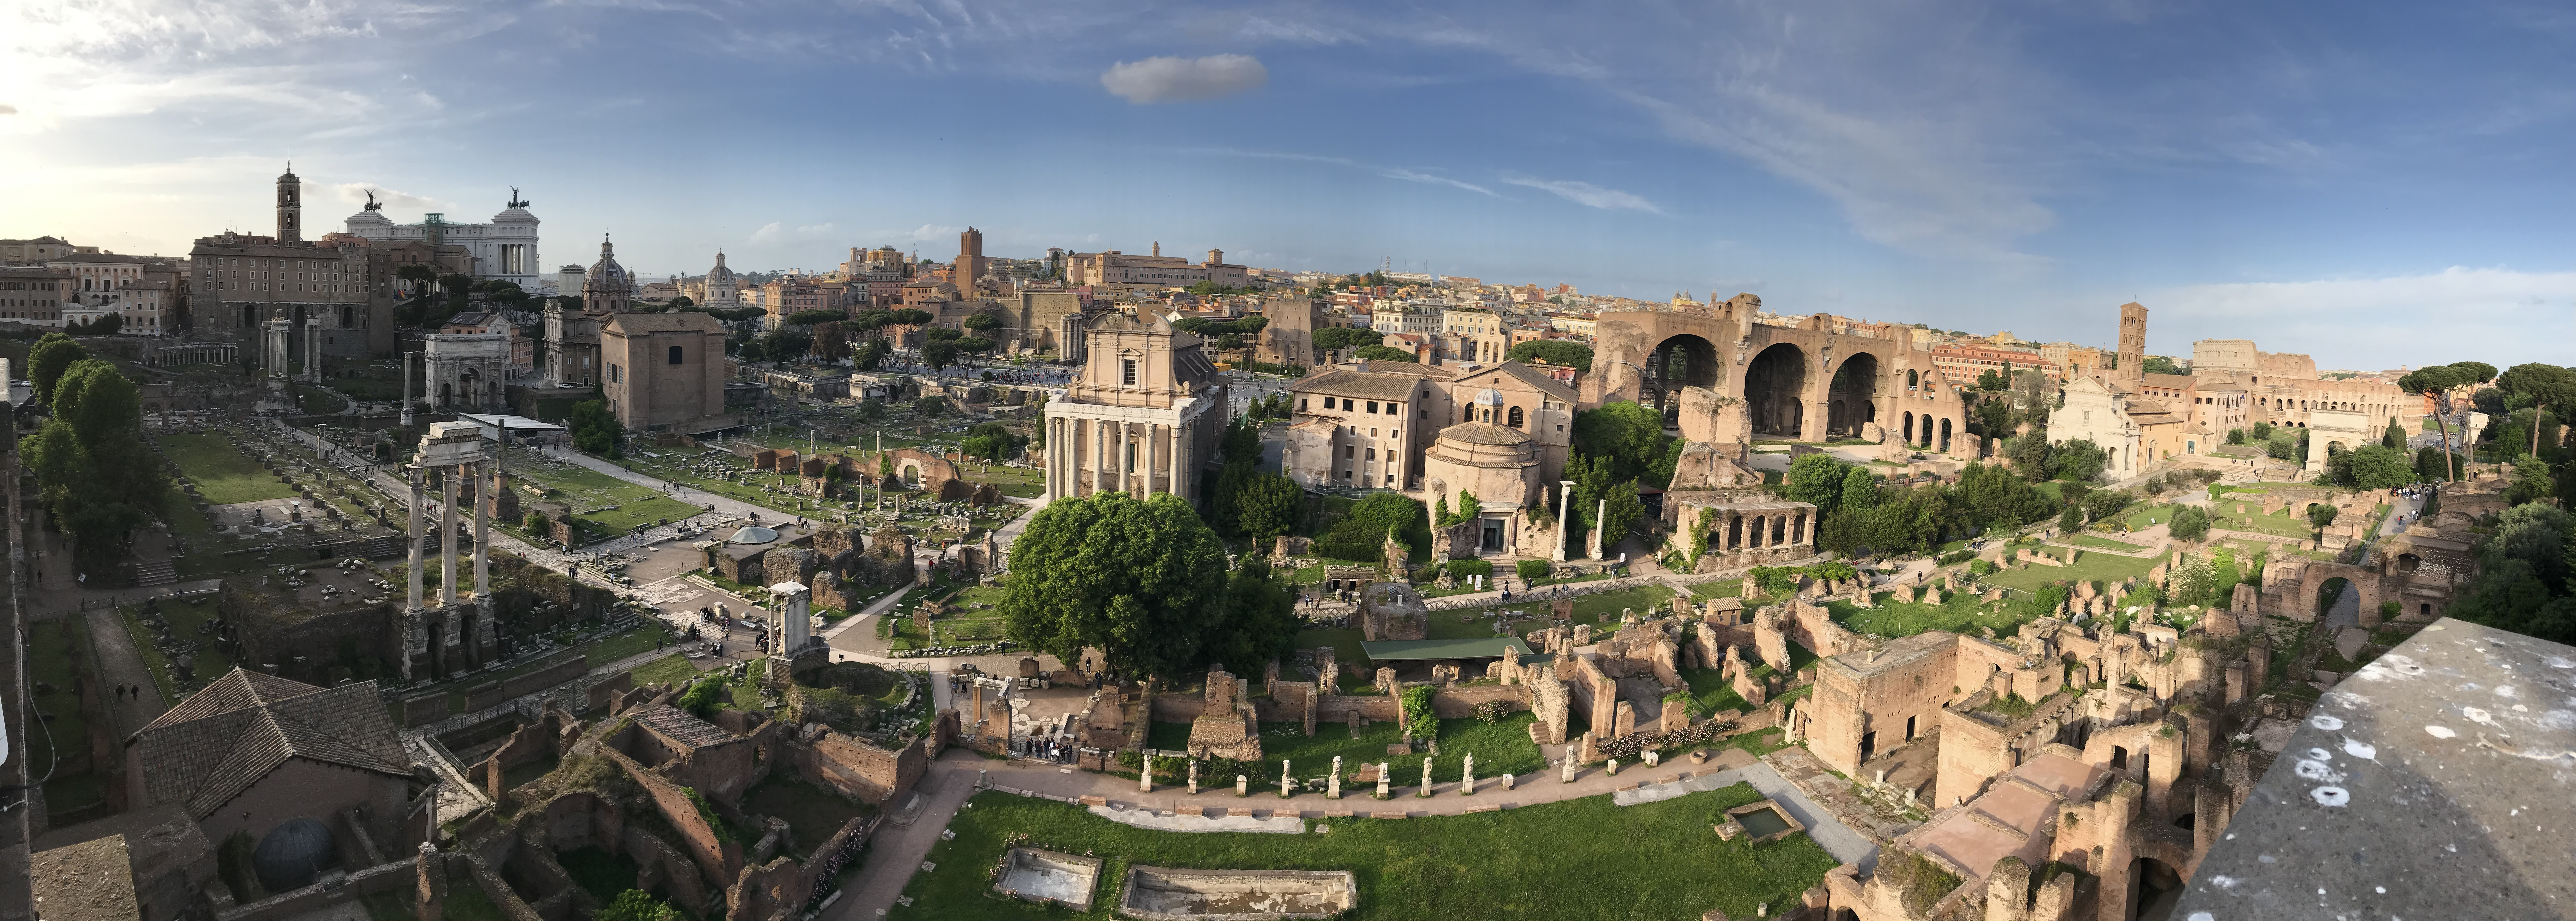 Forum romain vu du Palatin